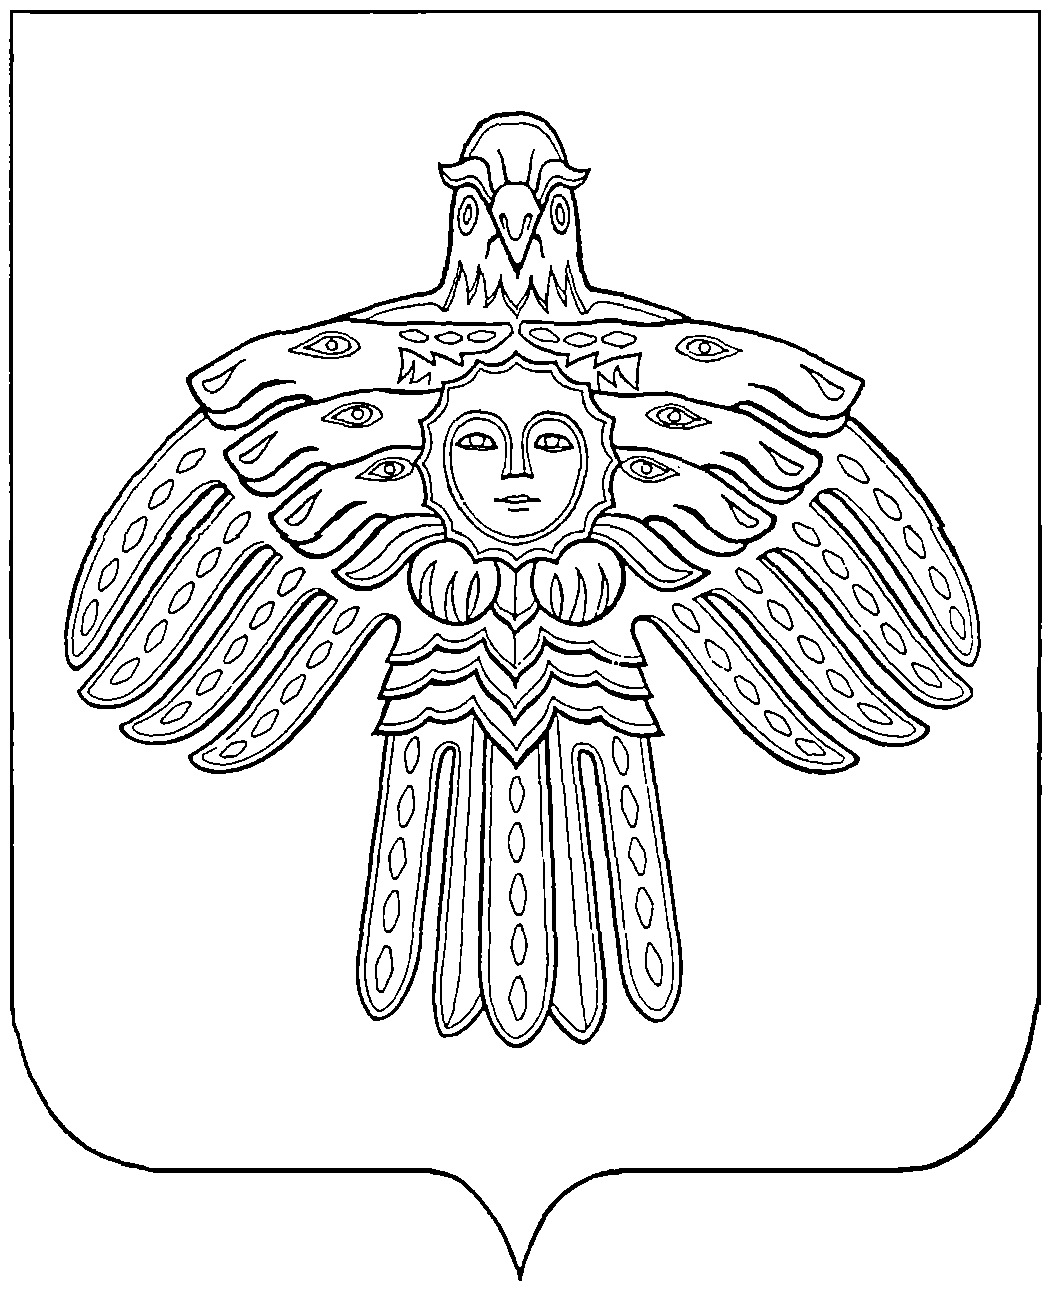 Герб Республики Коми раскраска